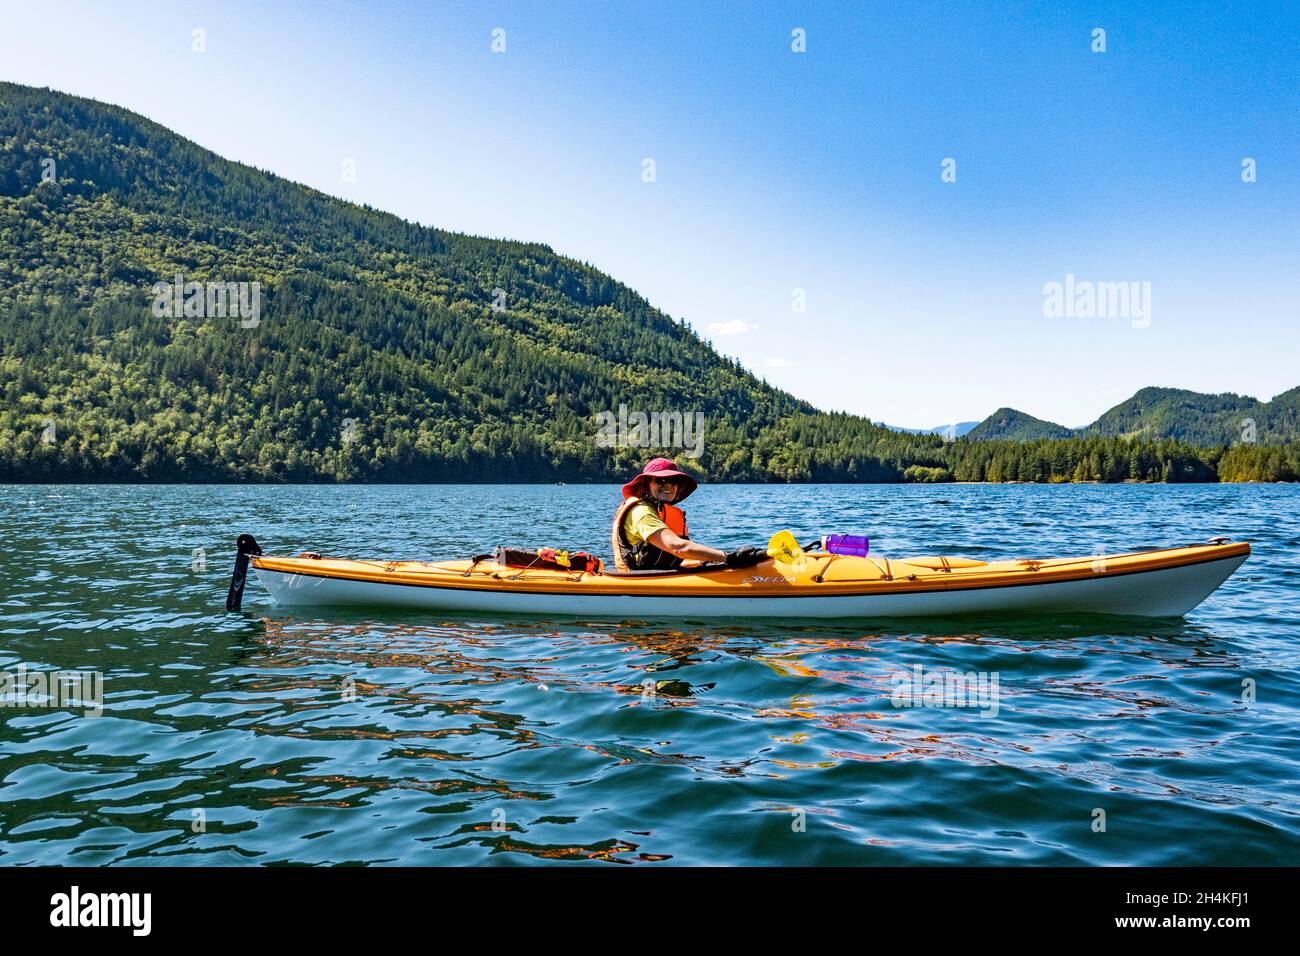 Eine Frau kajaks auf Hicks Lake, British Columbia, Kanada. Stockfoto